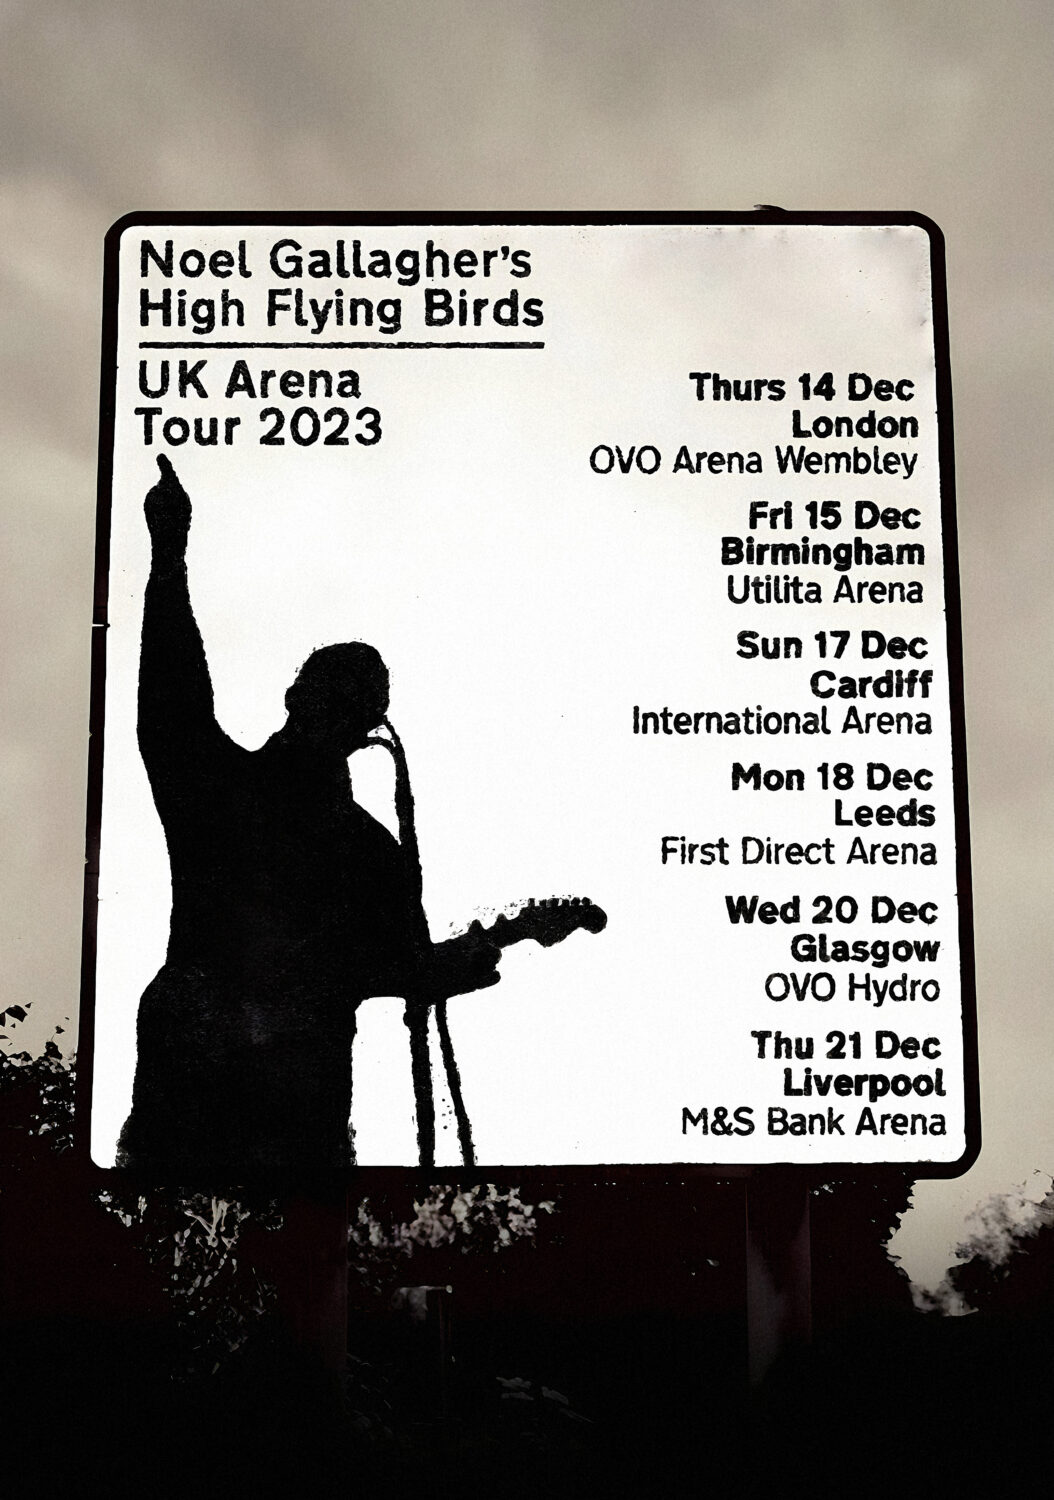 noel gallagher uk arena tour 2023